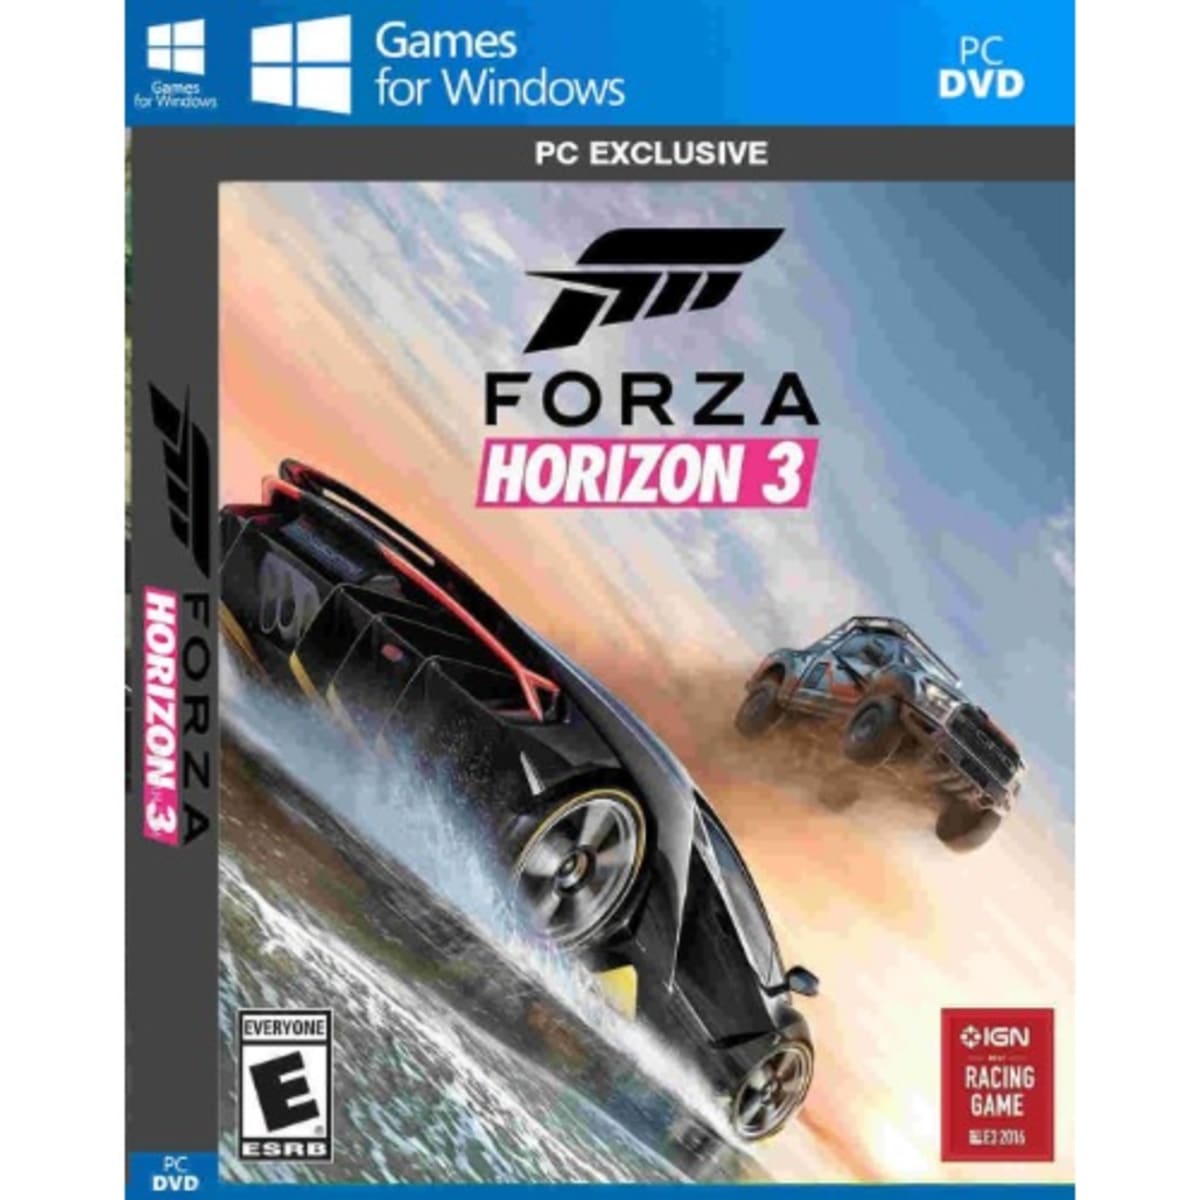 Egyptian pc gamers - Forza.Horizon.3-CODEX (Size: 60.41 GB